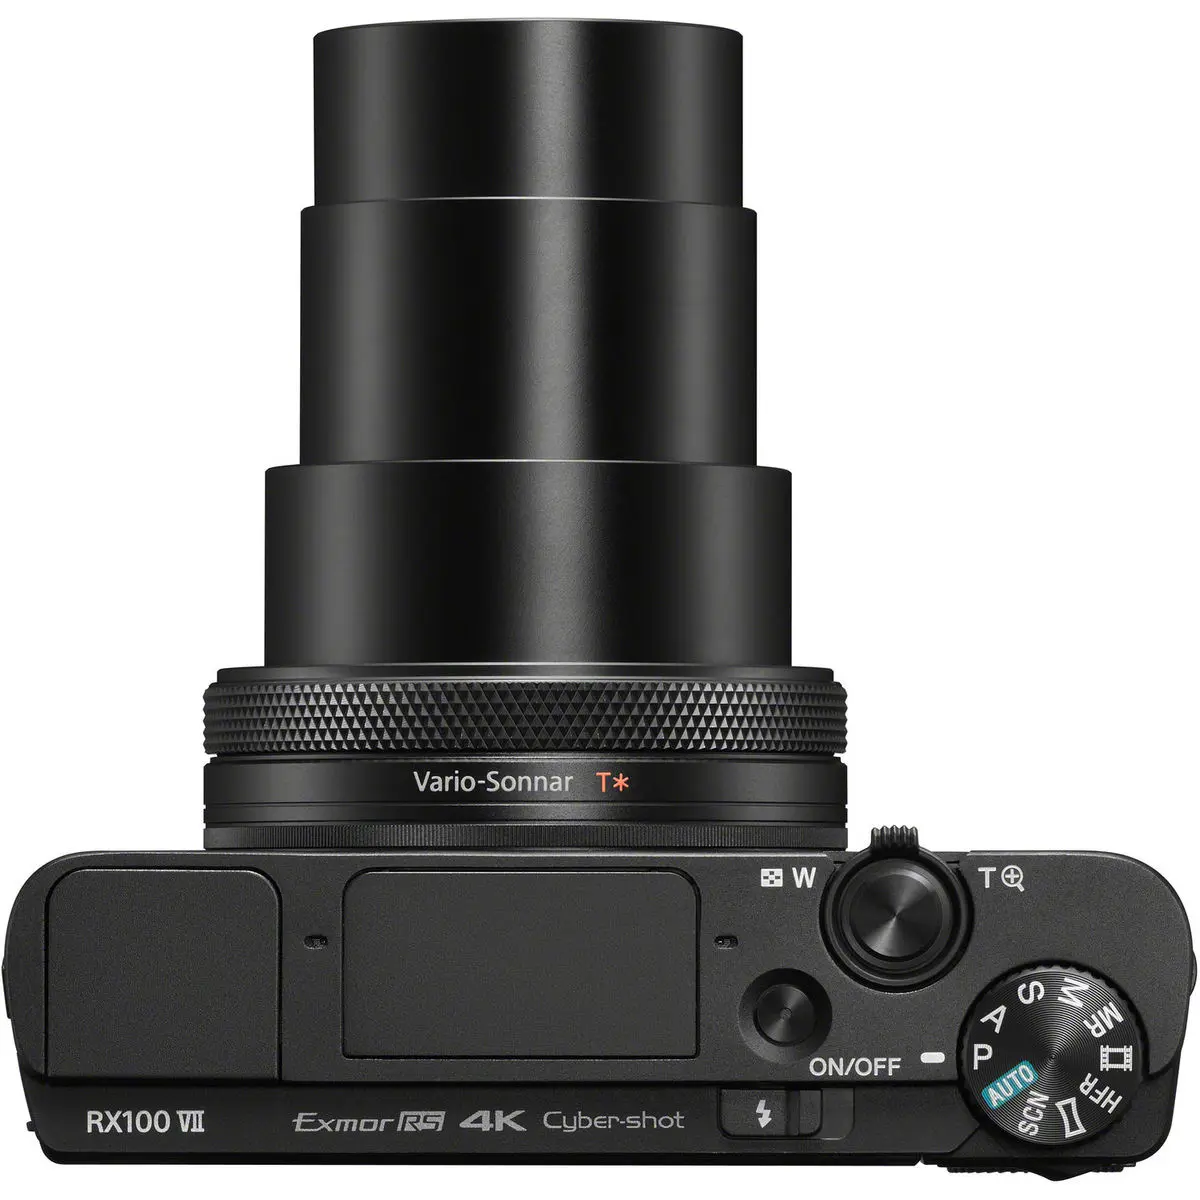 2. Sony Cyber-shot DSC-RX100 VII 24-200mm 20MP 4K Video Wi-Fi Camera